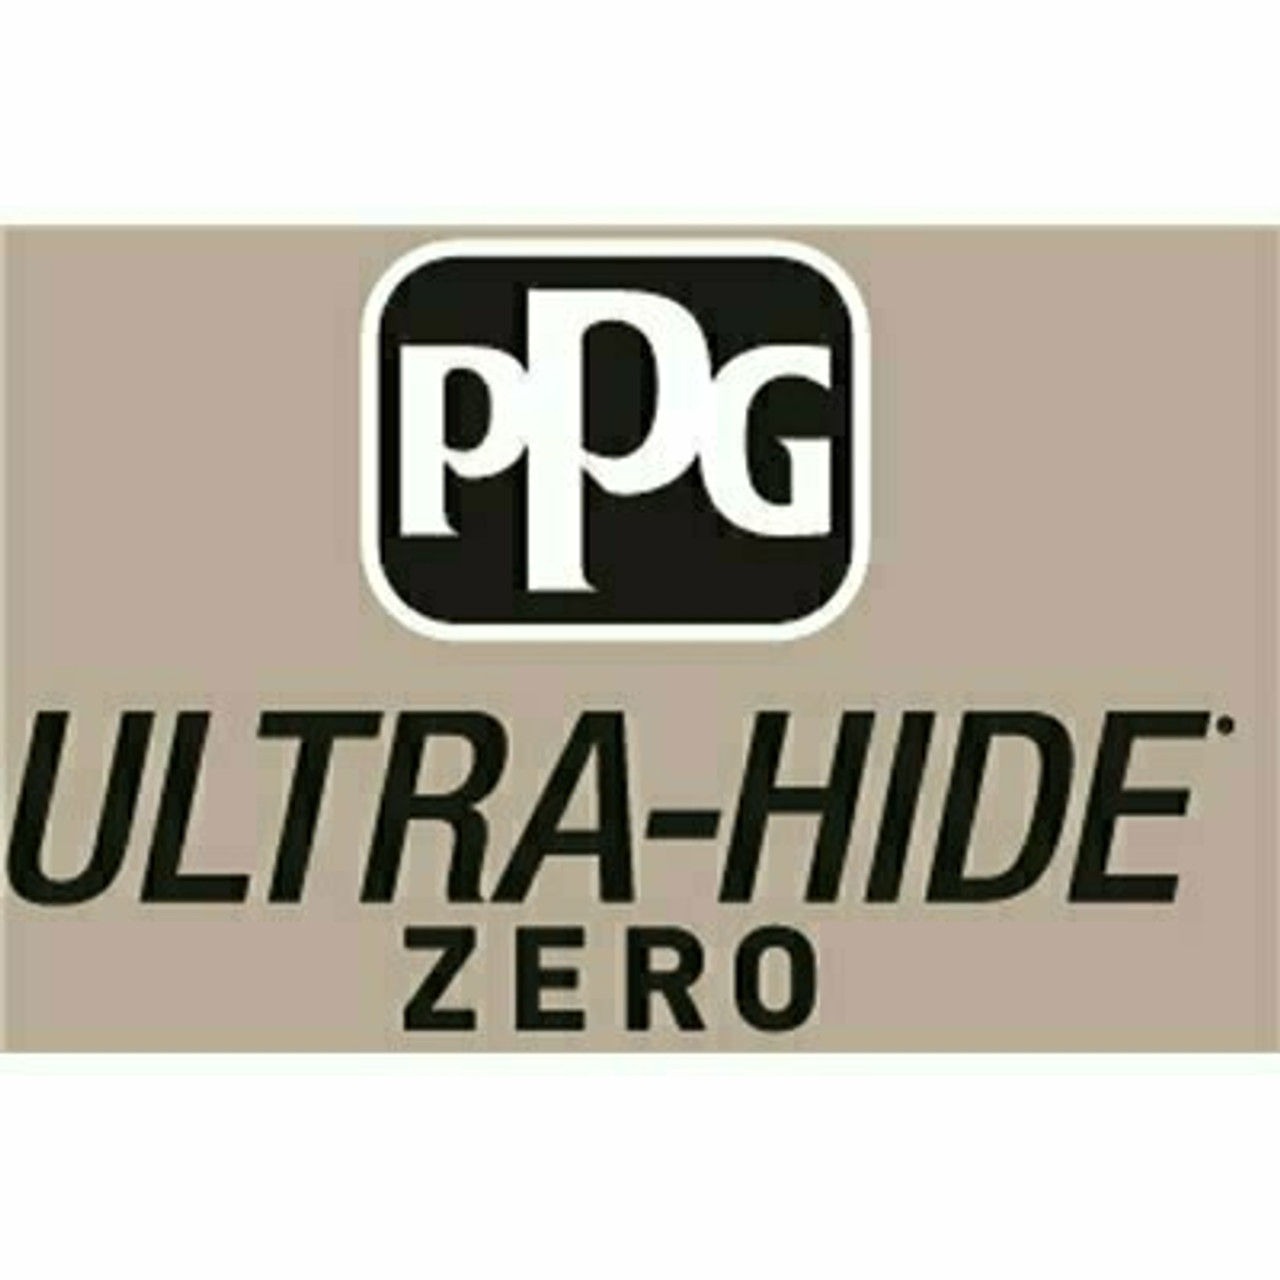 Ppg Ultra-Hide Zero 1 Gal. #Ppg1025-4 Sharkskin Satin Interior Paint